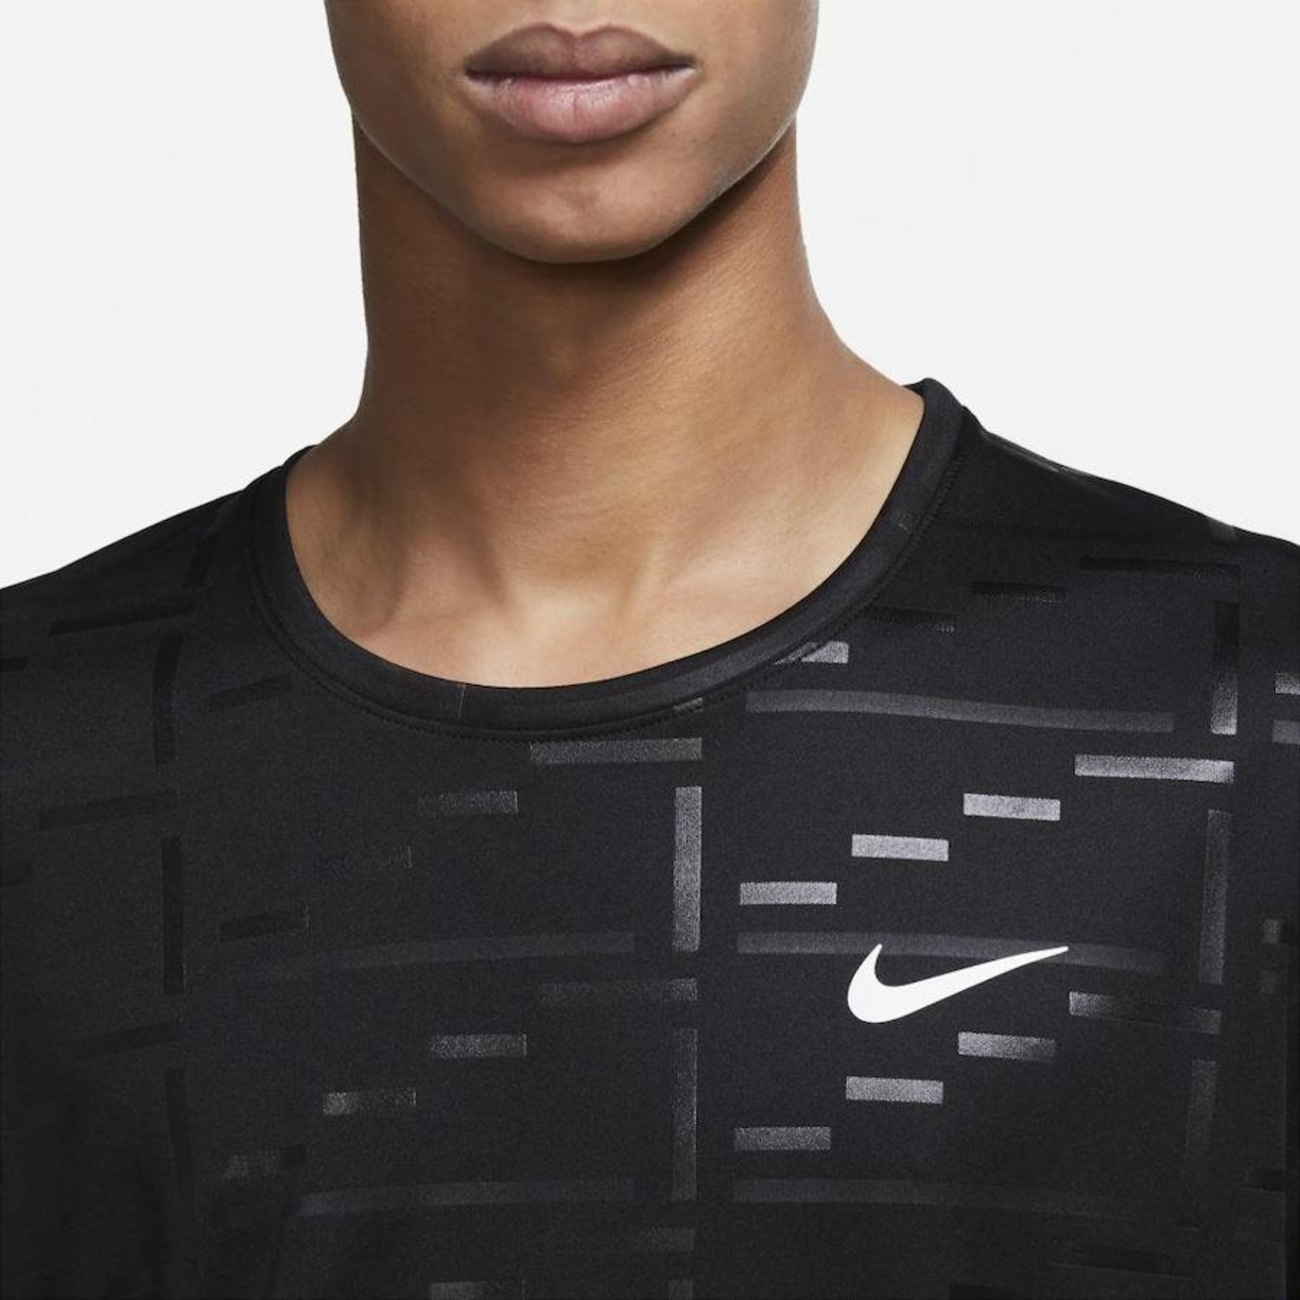 thief Notebook threat Camiseta Nike Dri-FIT UV Run Division Miler - Masculina - Centauro